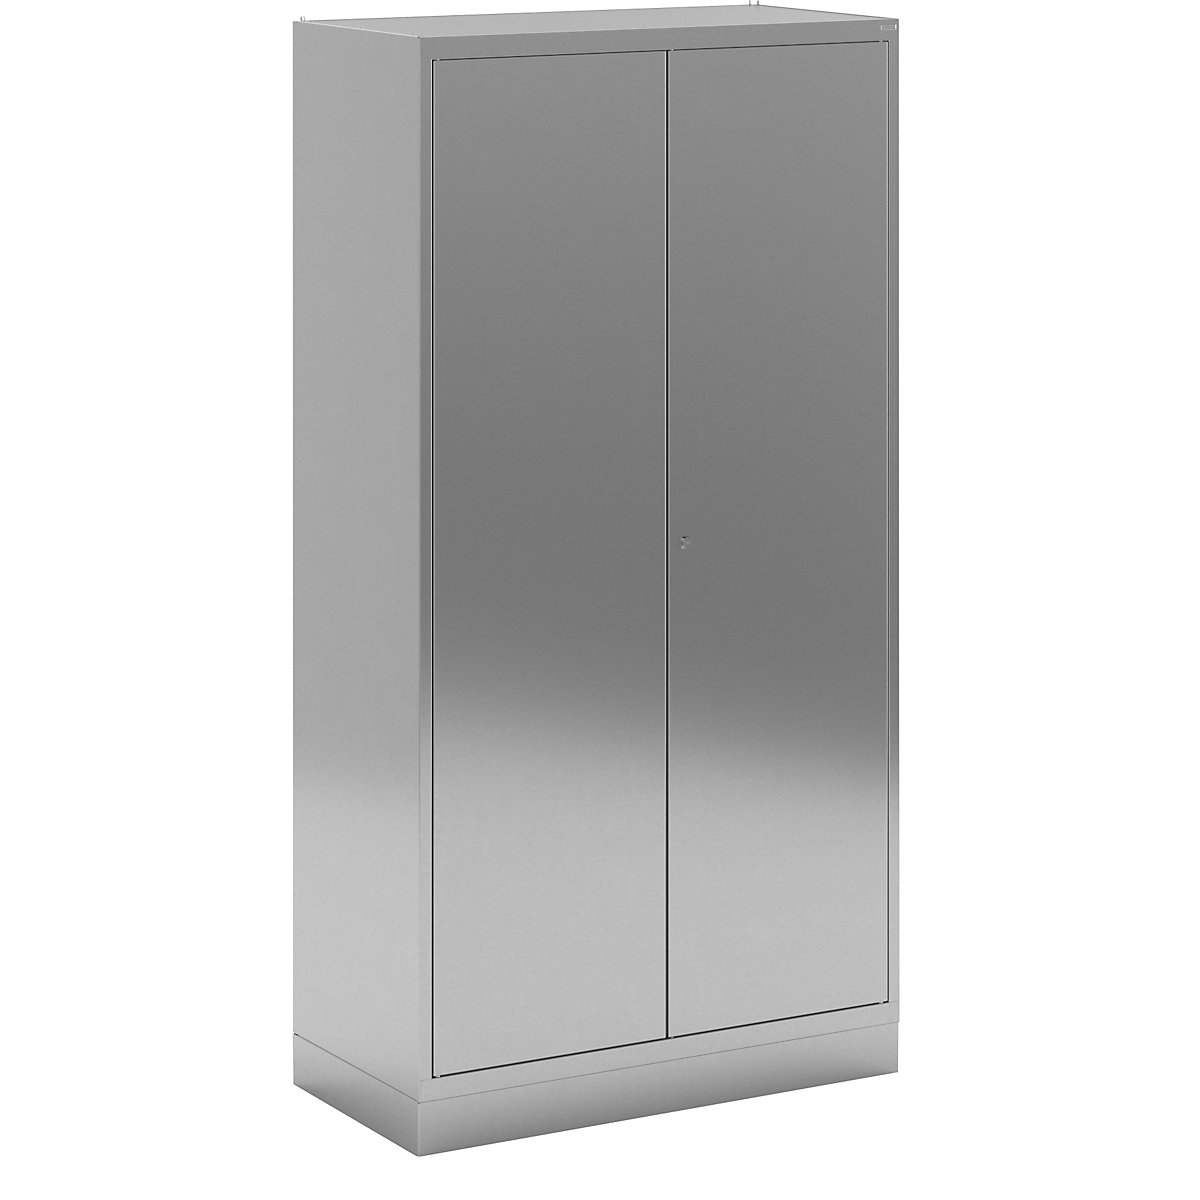 Stainless steel multi-purpose cupboard, double door cupboard, HxWxD 1950 x 1000 x 500 mm-11